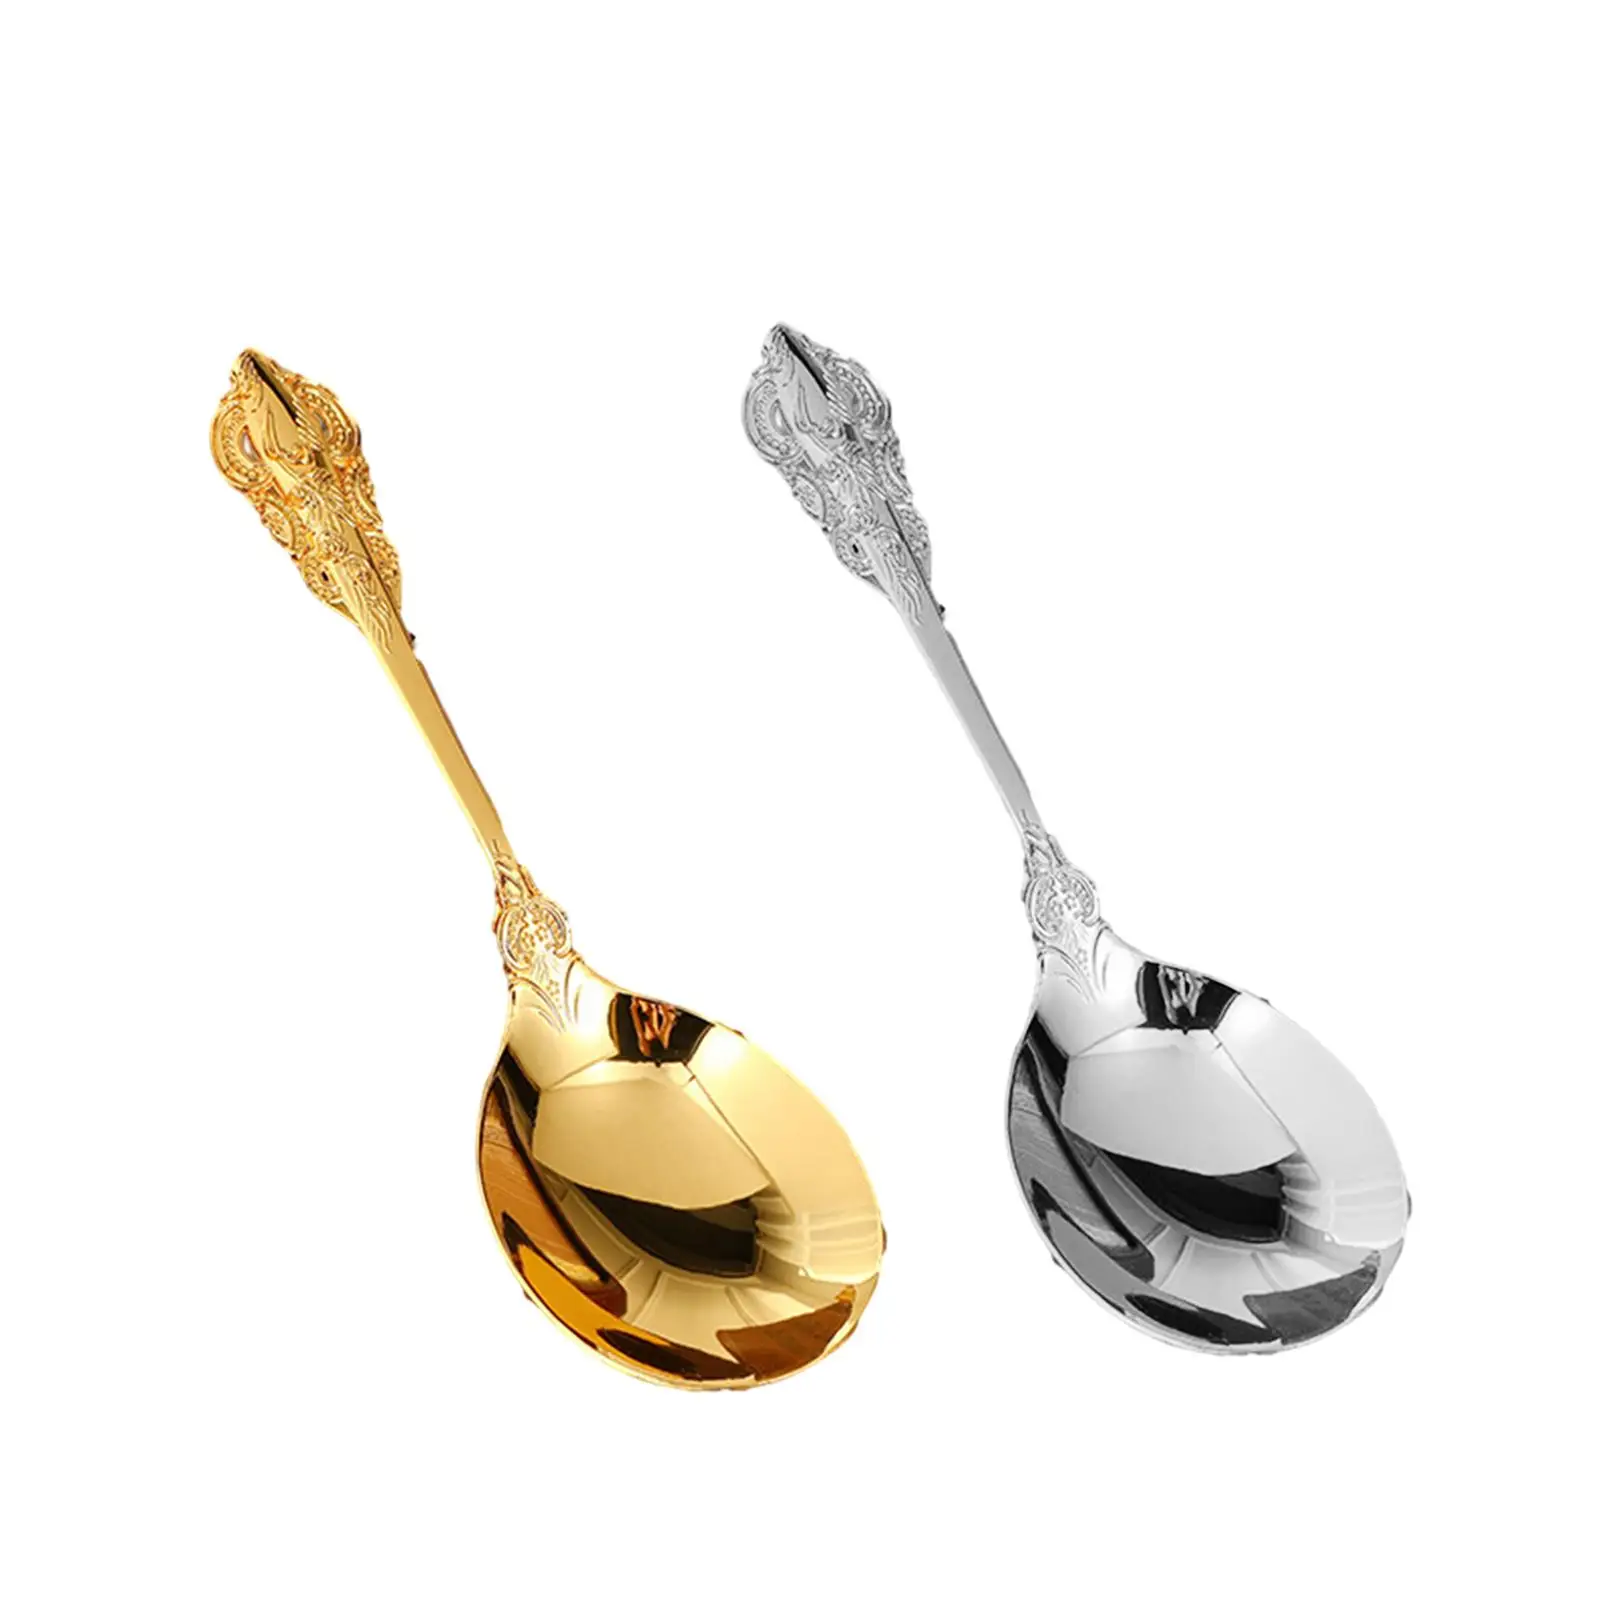 Catering Spoon Serving Spoon, Tableware Metal Embossed Tablespoon Soup Spoon for Cooking, Weddings, Buffet